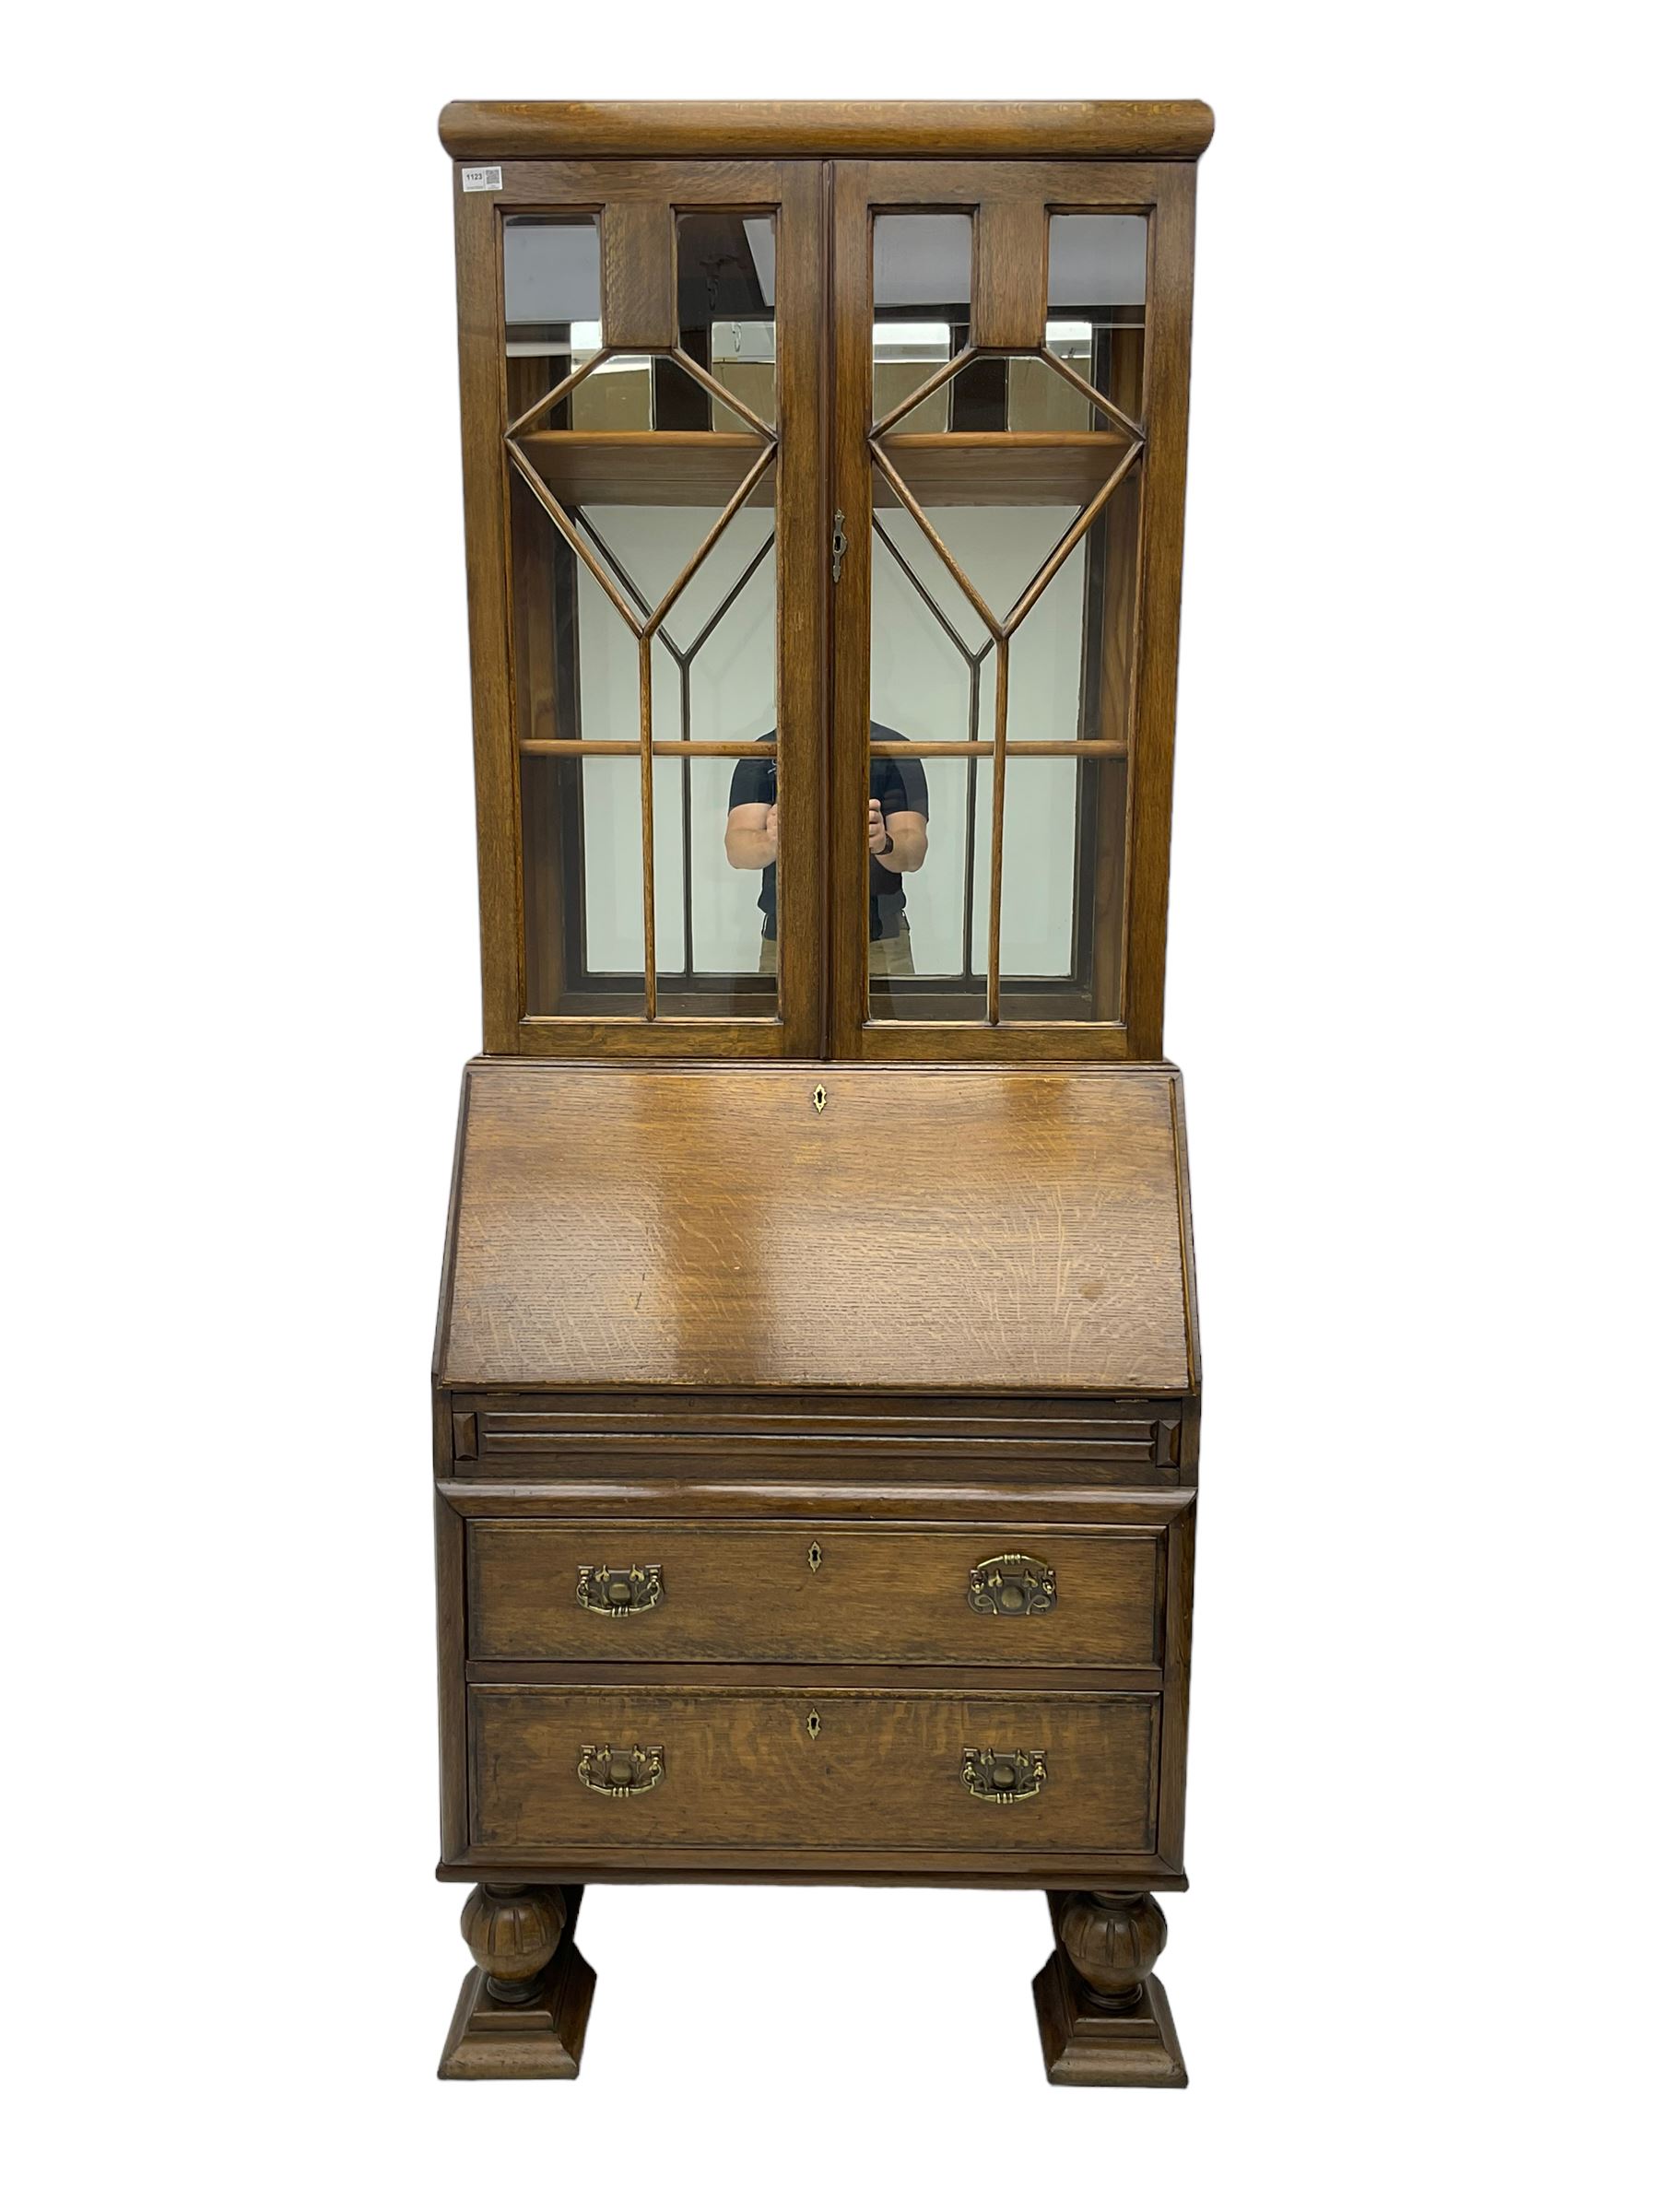 Early 20th century oak bureau bookcase - Image 6 of 7